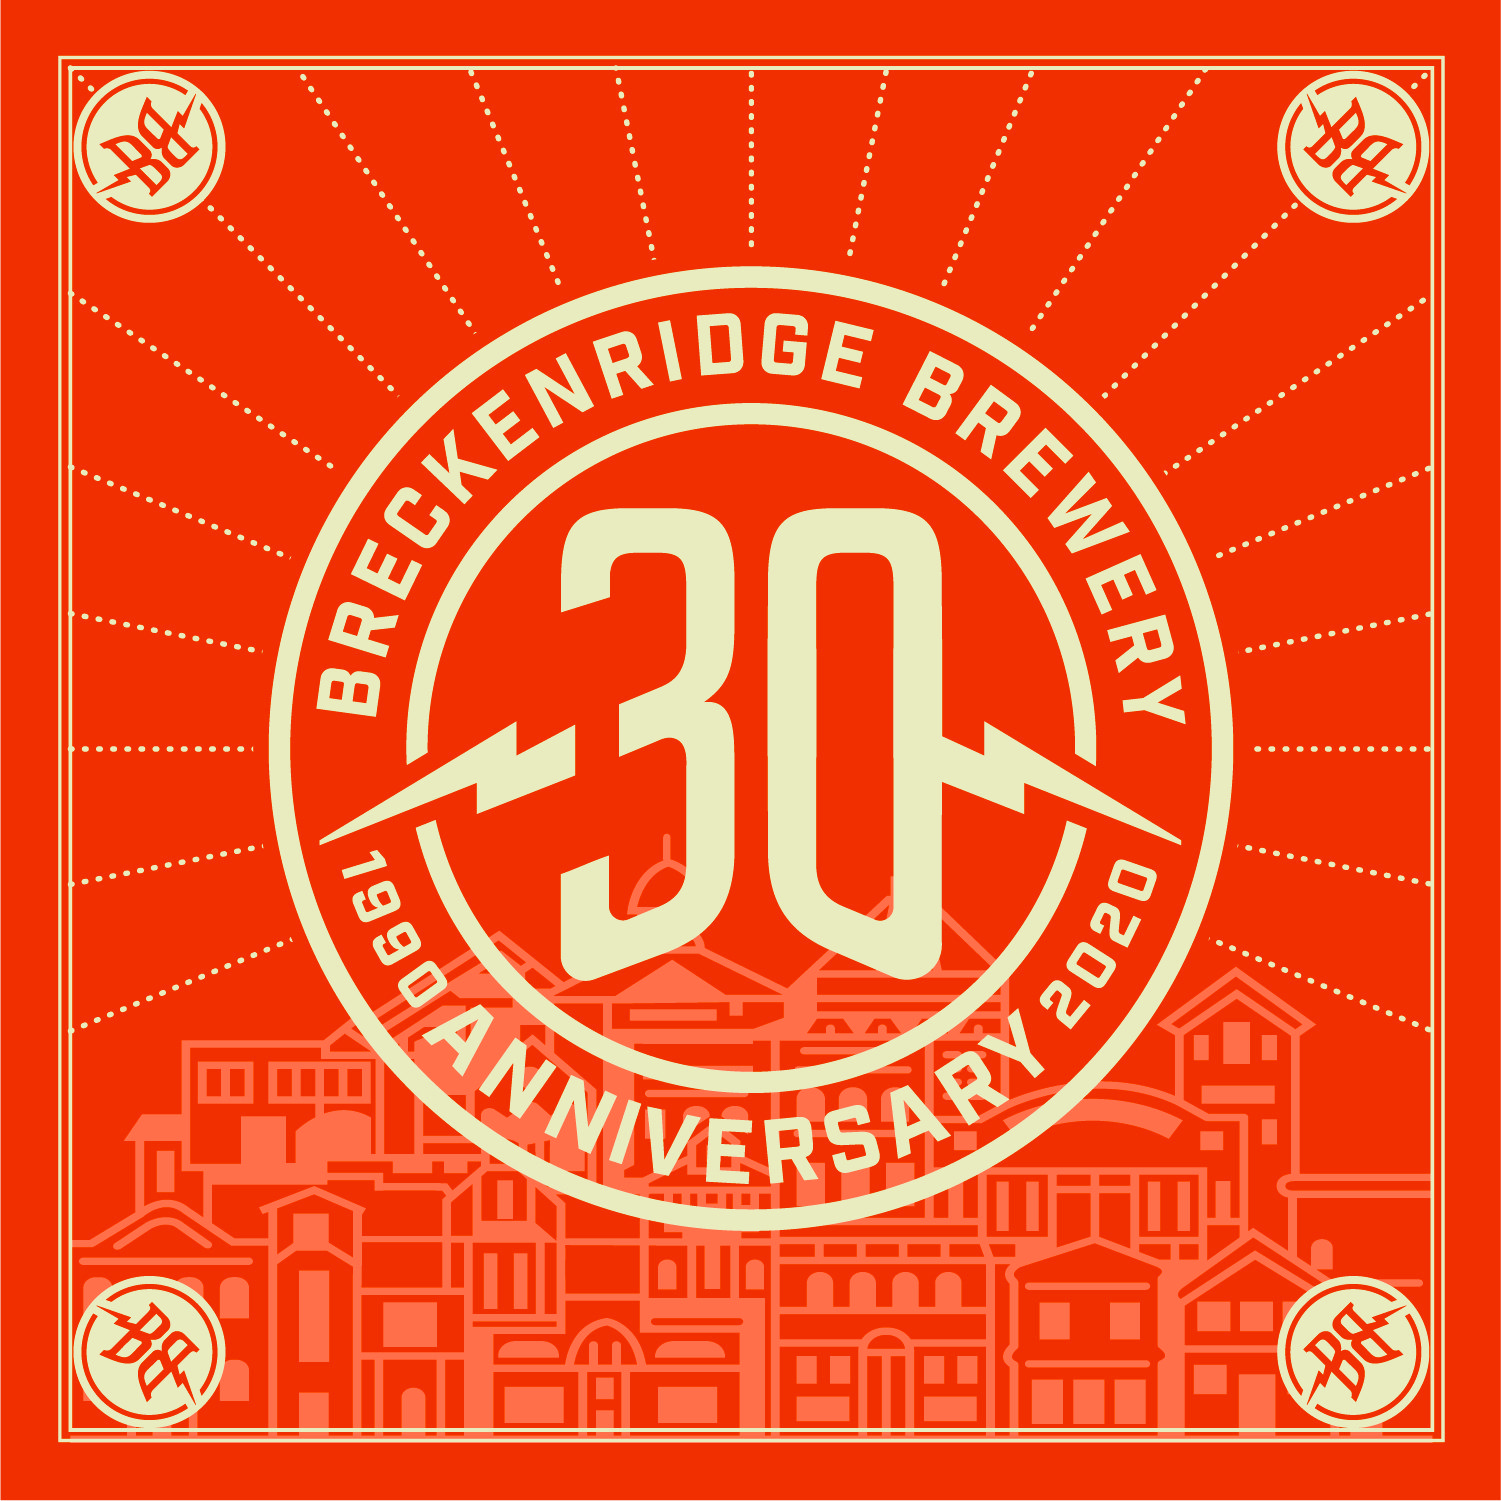 breckinridge brewery bandana